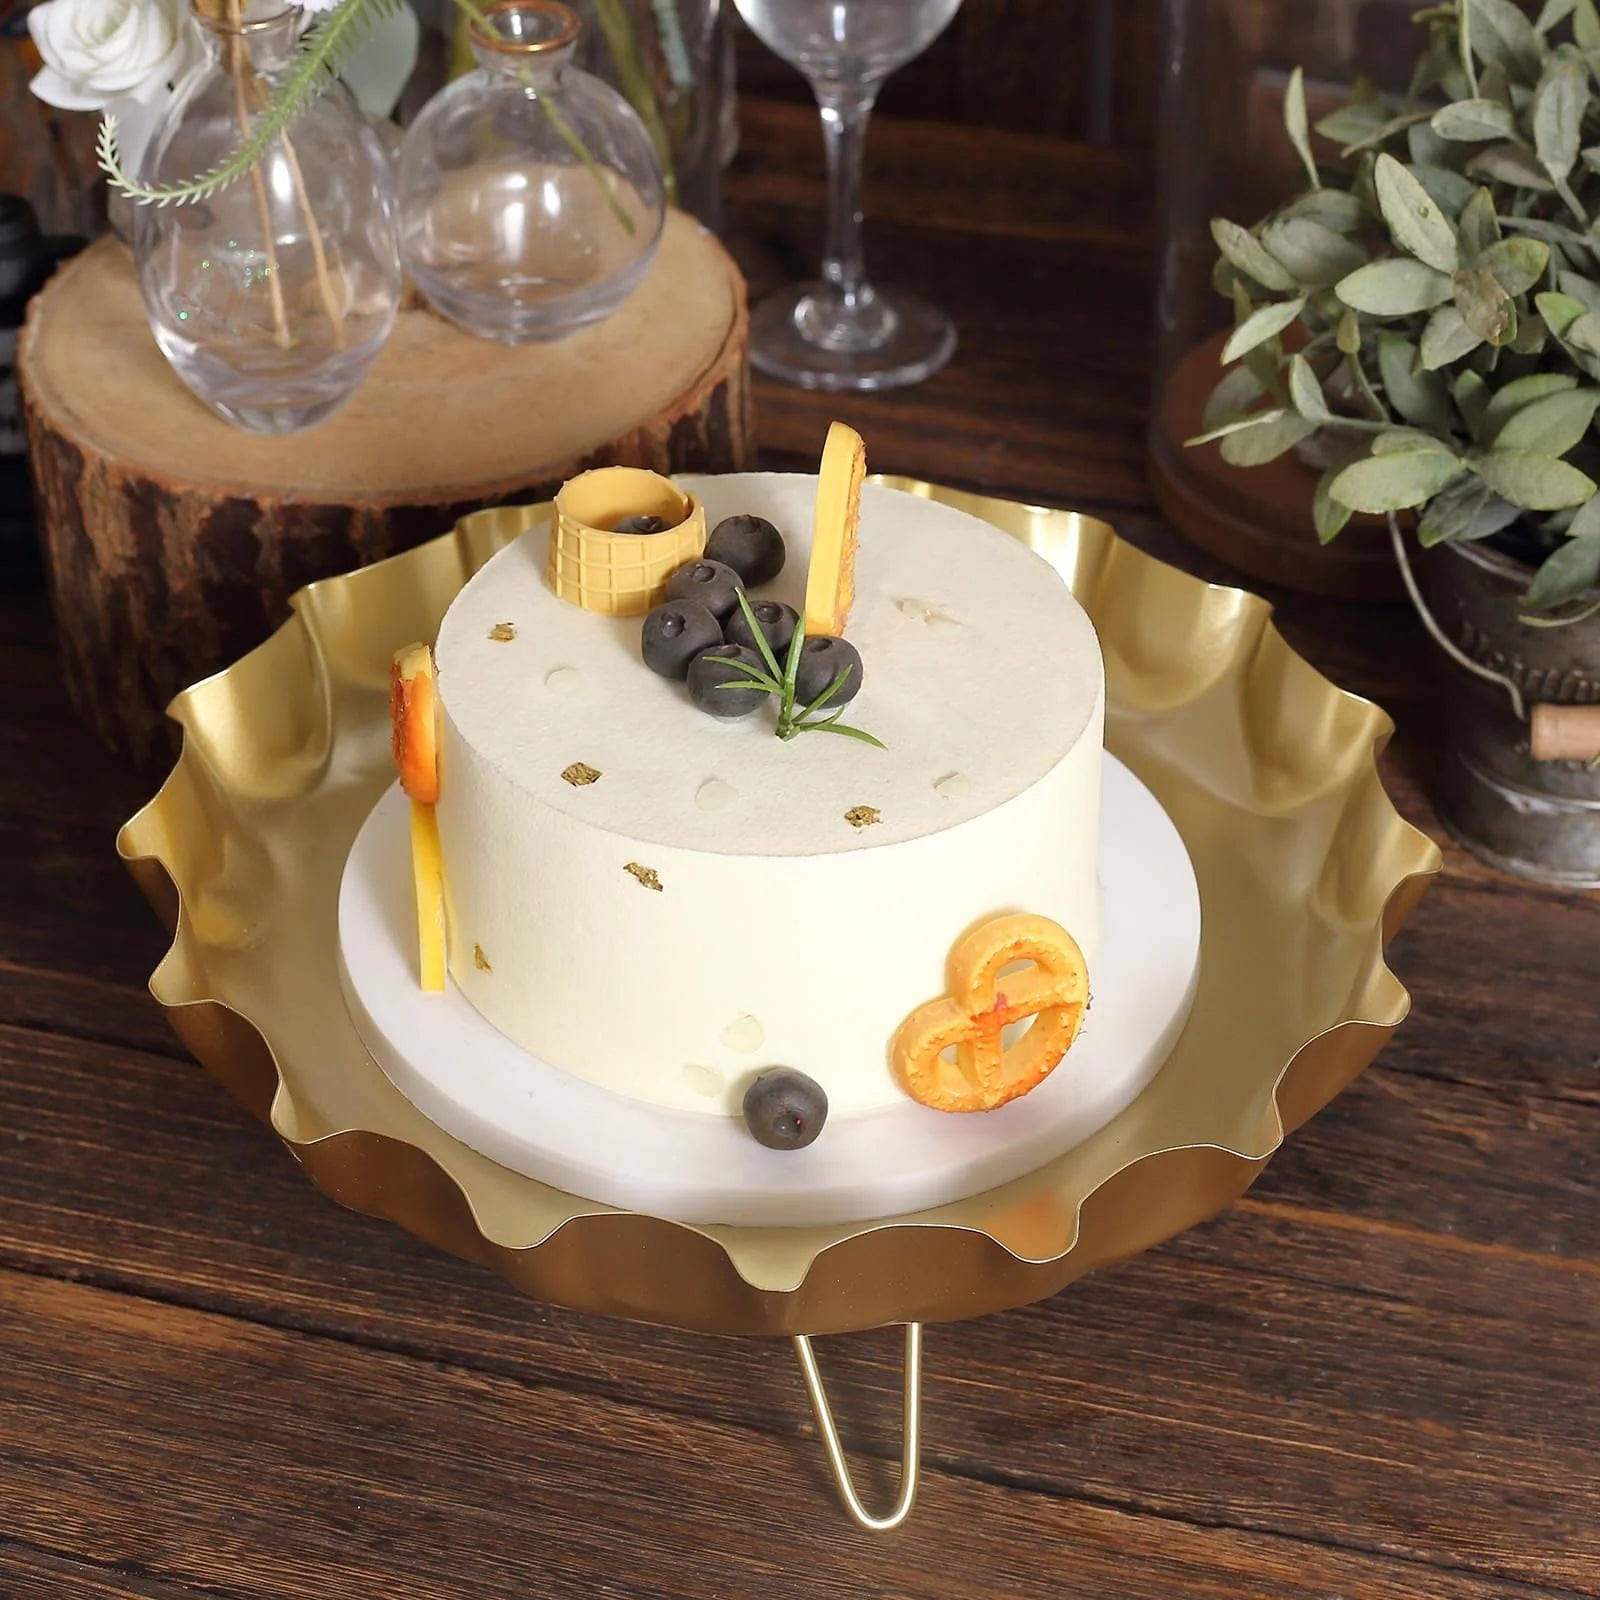 Gold 12 in Metal Crown Cap Round Cupcake Display Stand Dessert Serving Tray